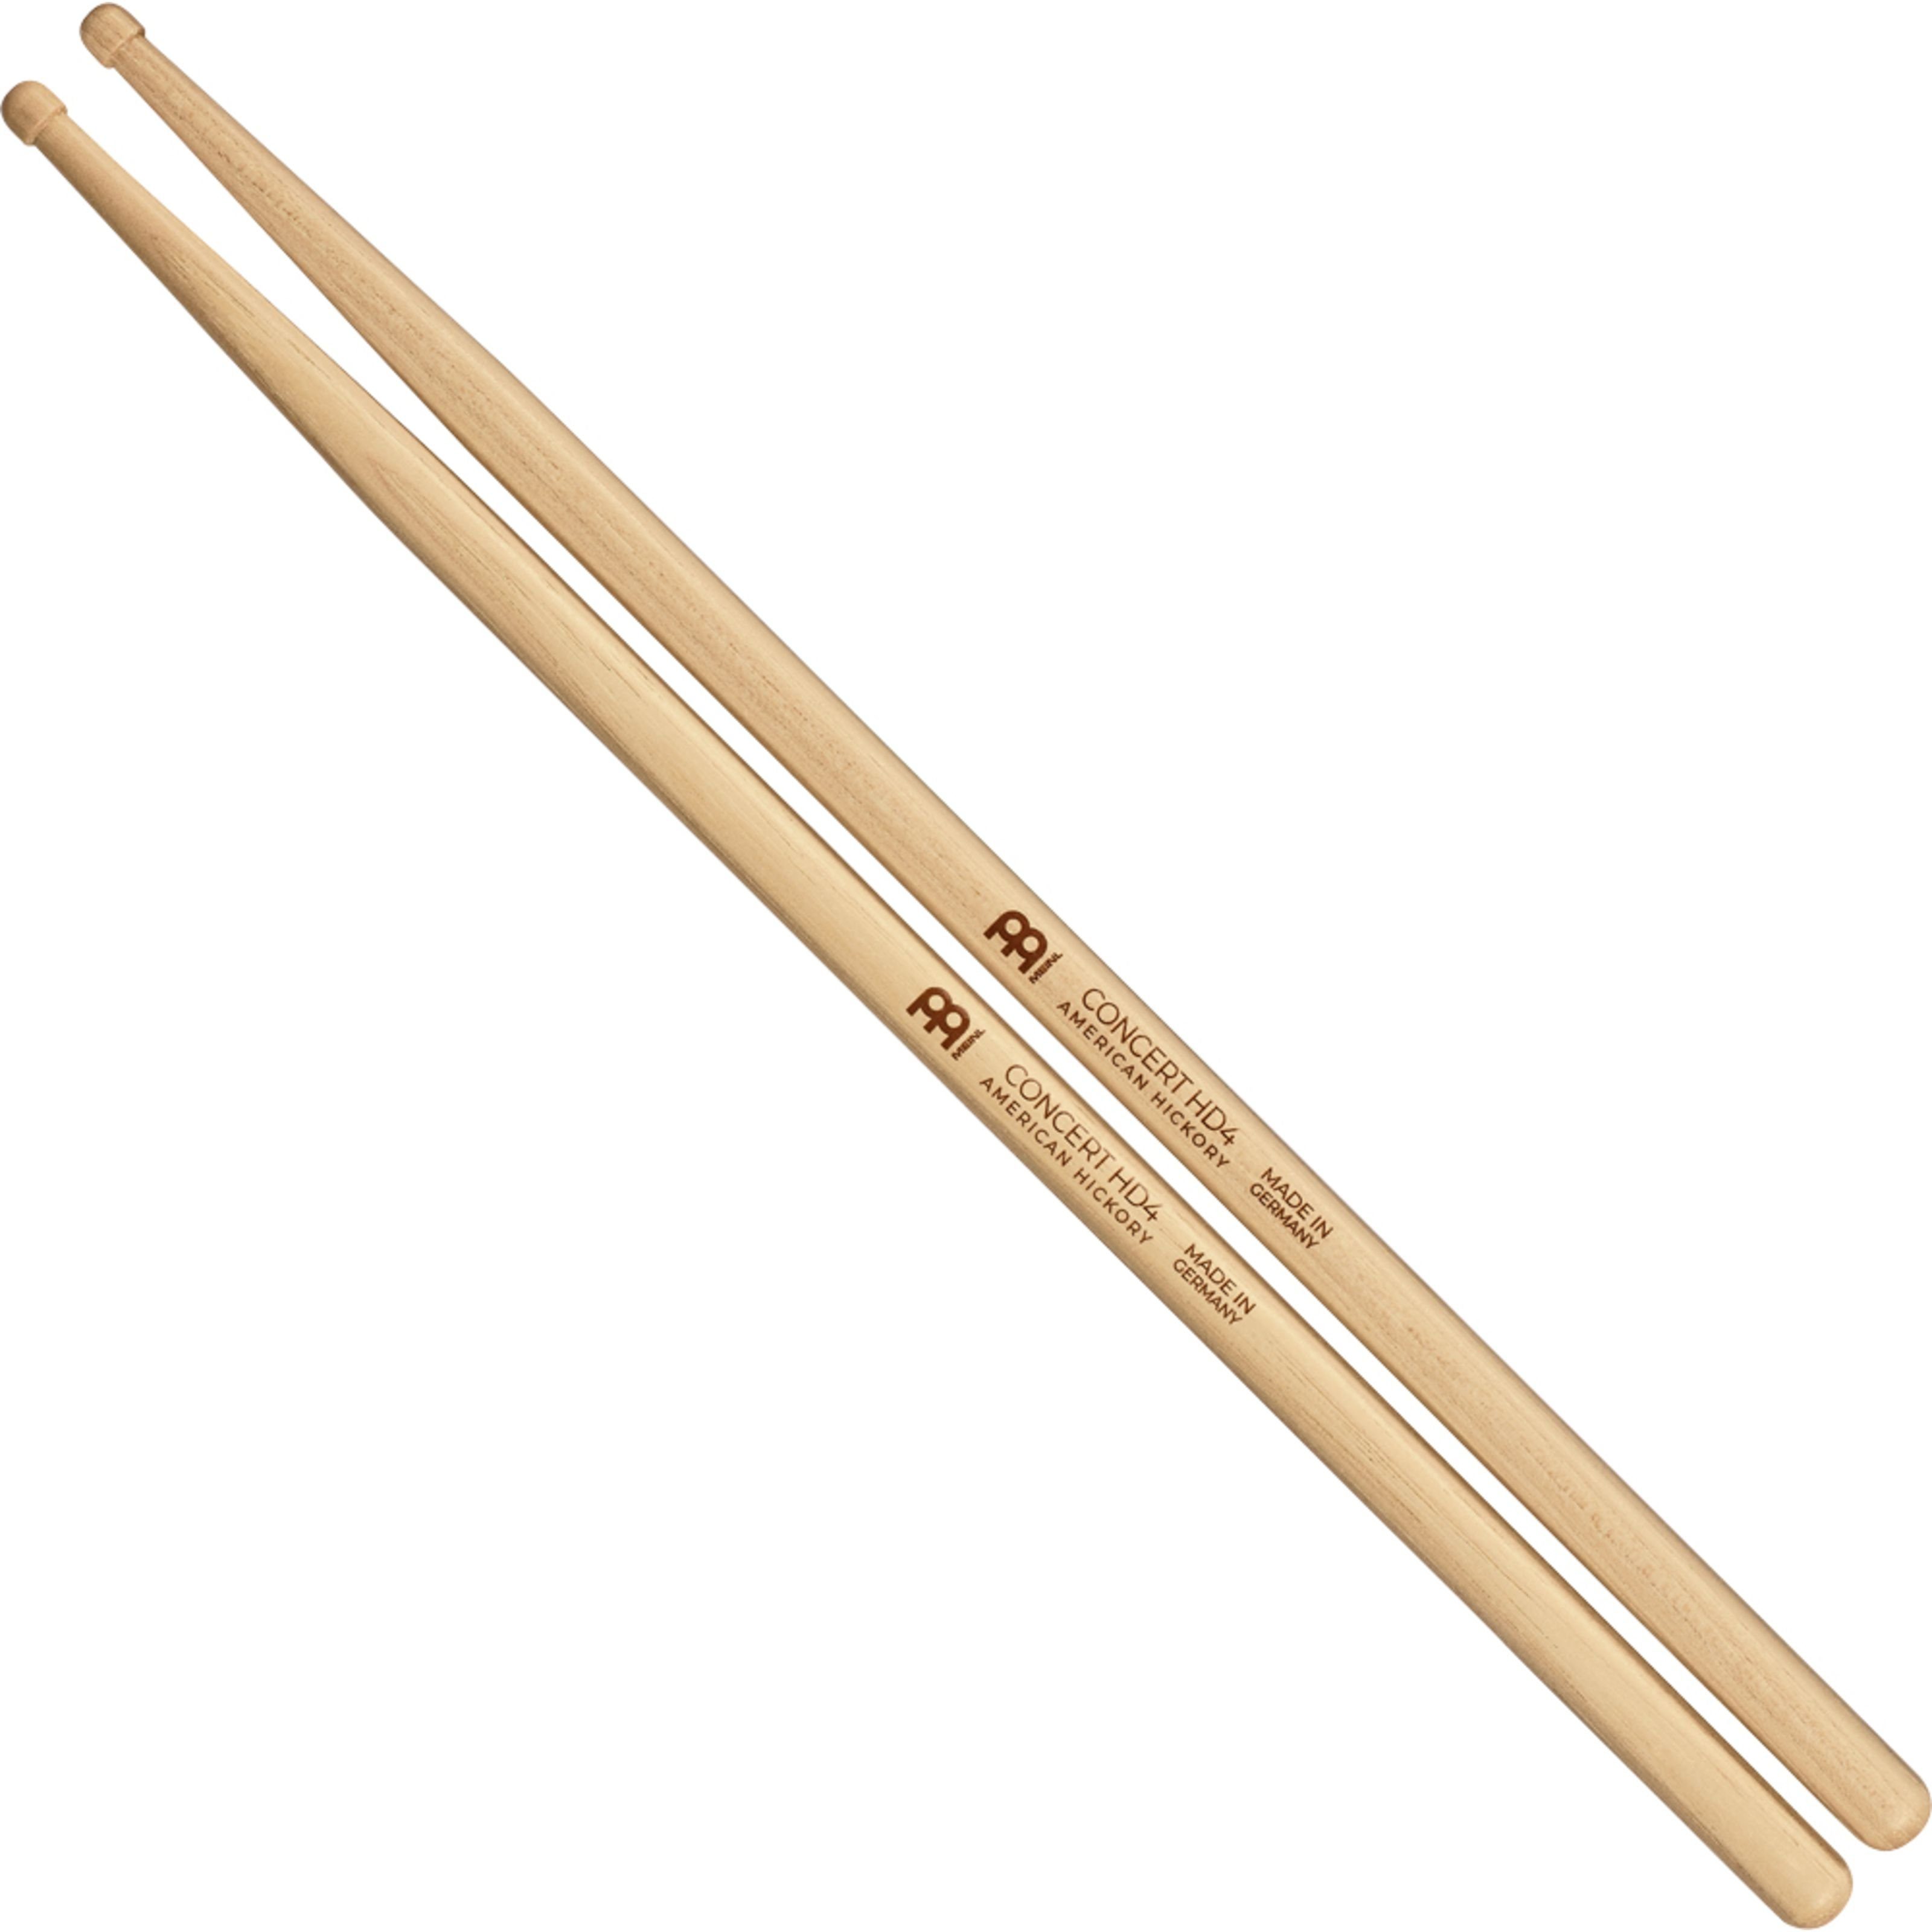 Meinl Percussion Spielzeug-Musikinstrument, SB131 Concert HD4 Sticks American Hickory - Drumsticks